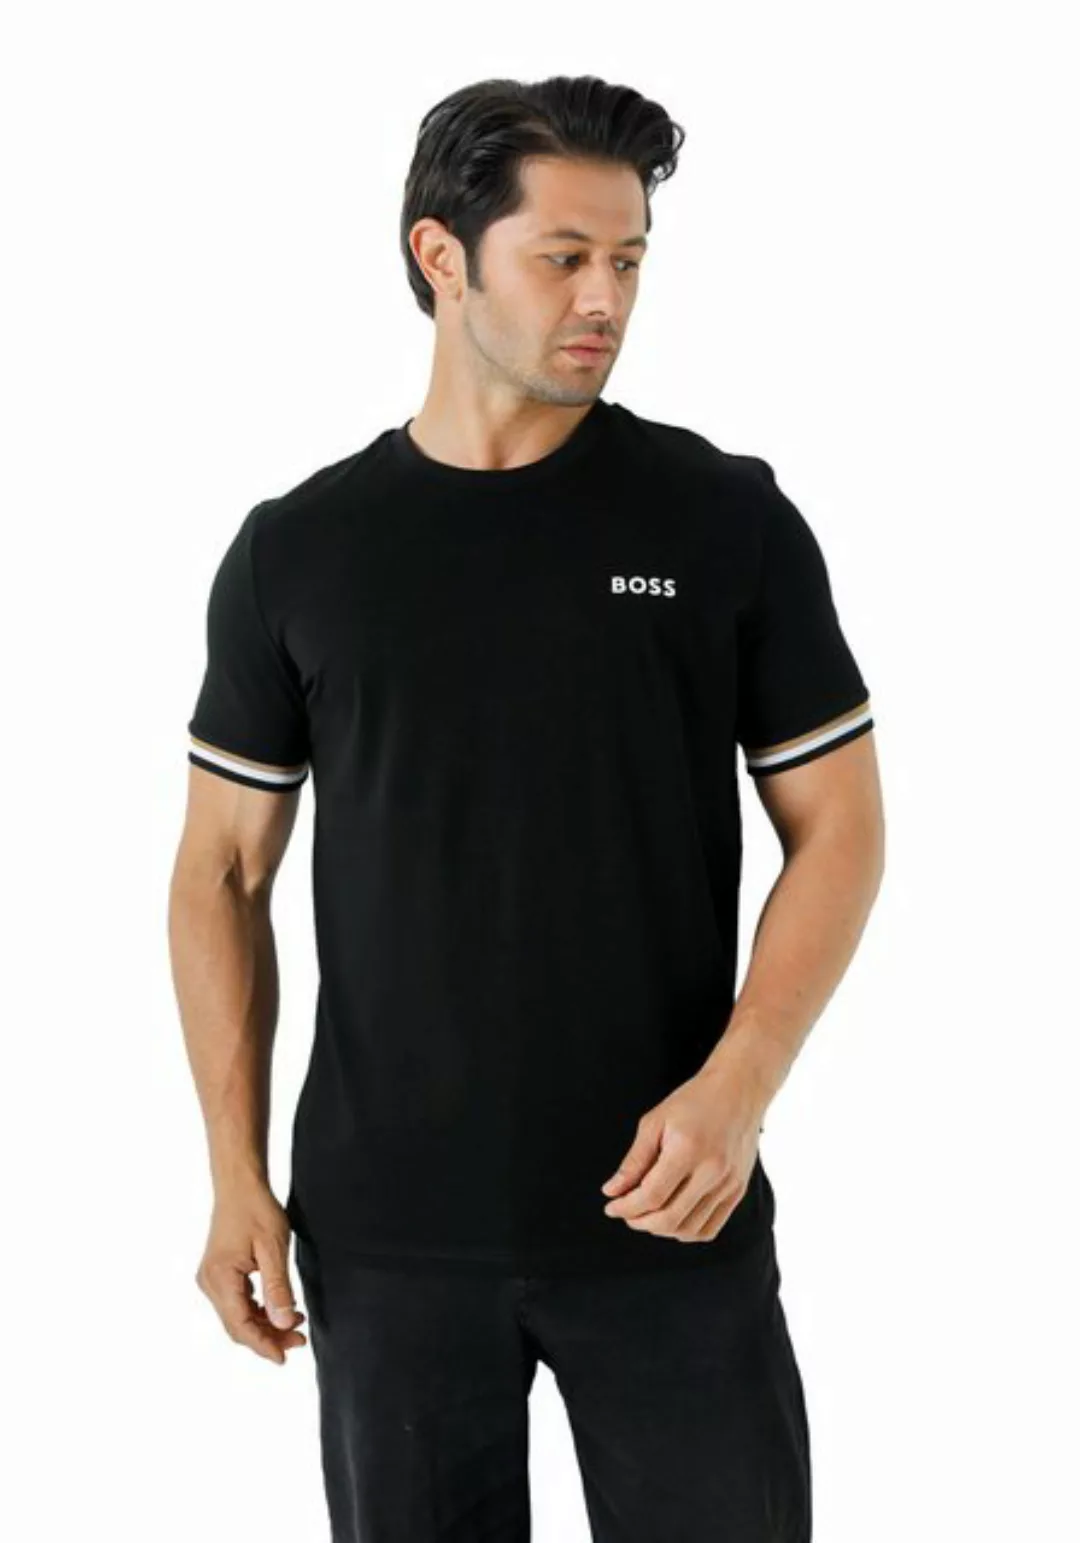 BOSS T-Shirt Hugo Boss Herren Shirt Kurzarm BOSS X MATTEO BERRETTINI mit wa günstig online kaufen